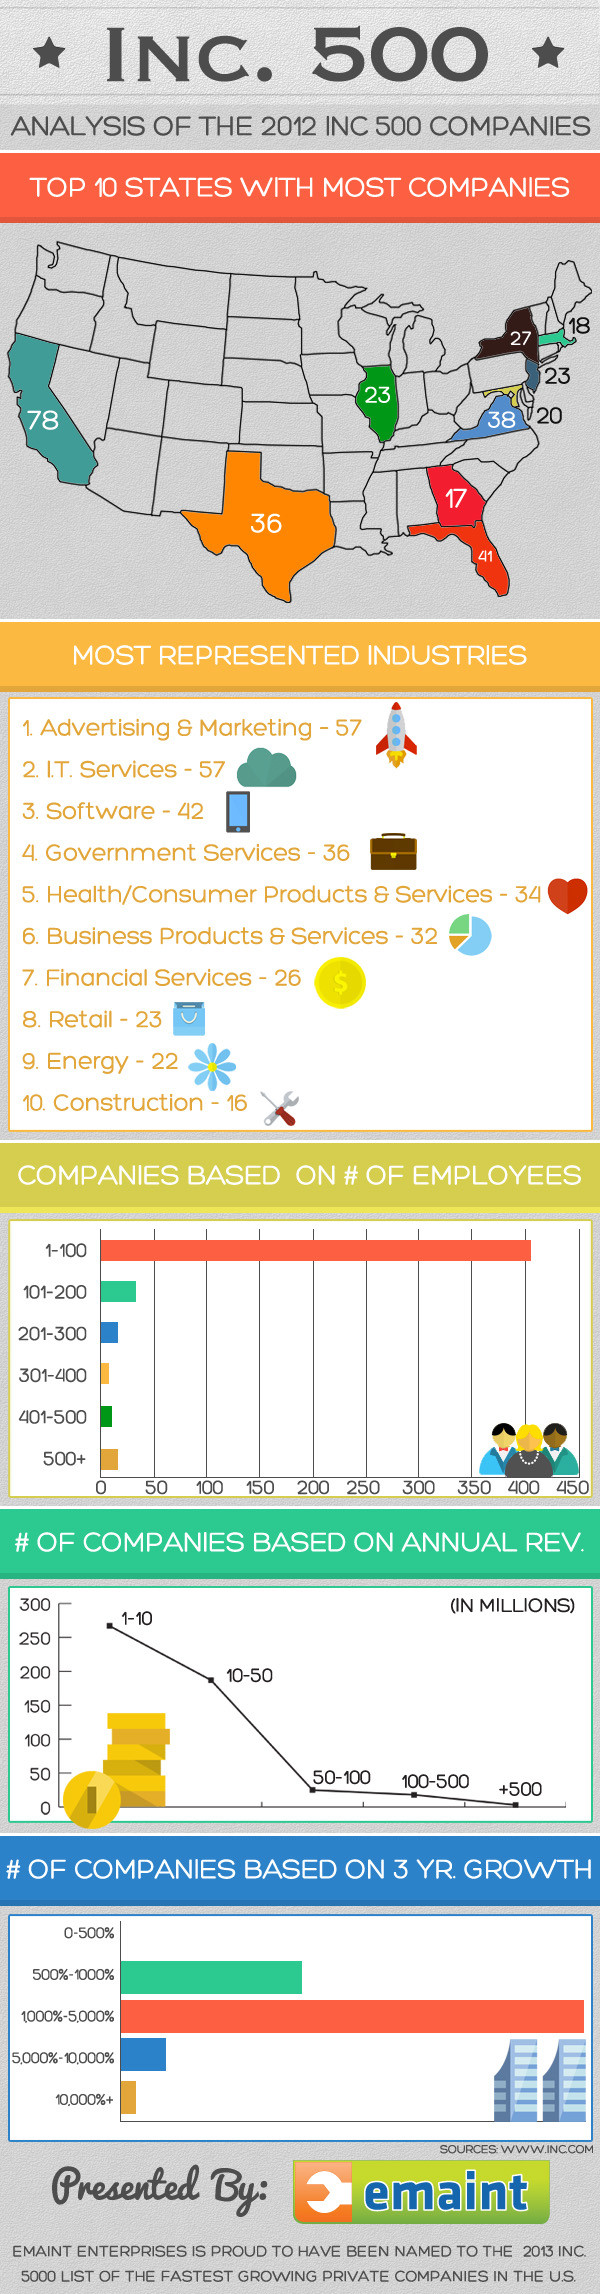 Inc. 500 Analysis of the 2012 Inc. 500 Companies infographic